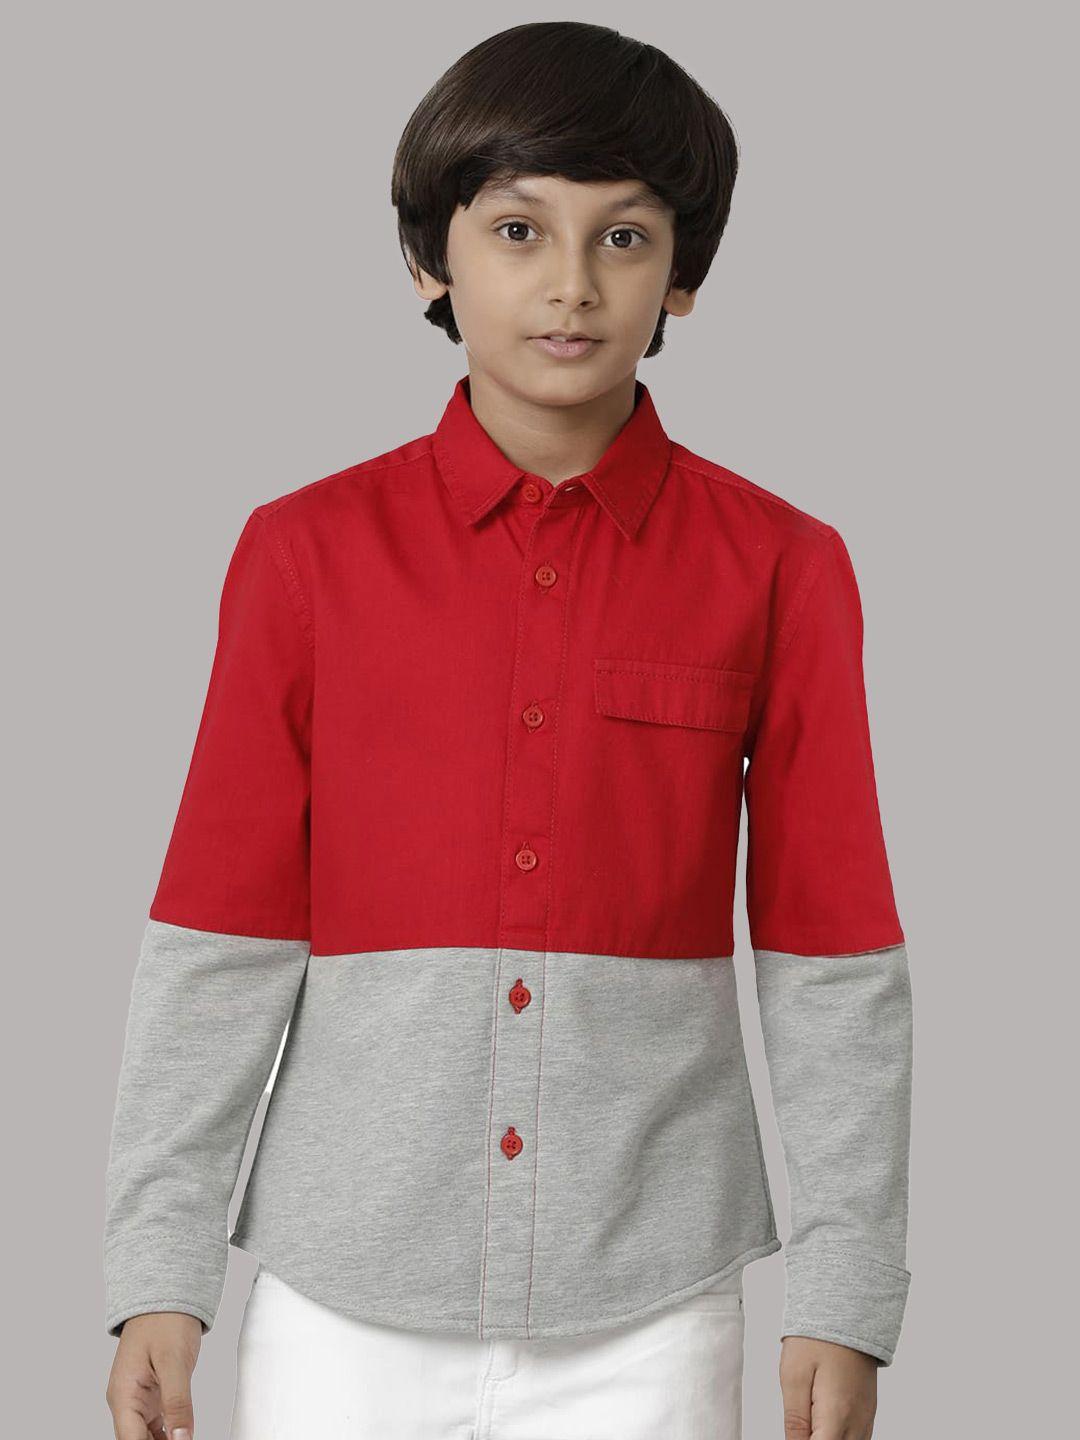 under fourteen only boys colourblocked opaque cotton casual shirt